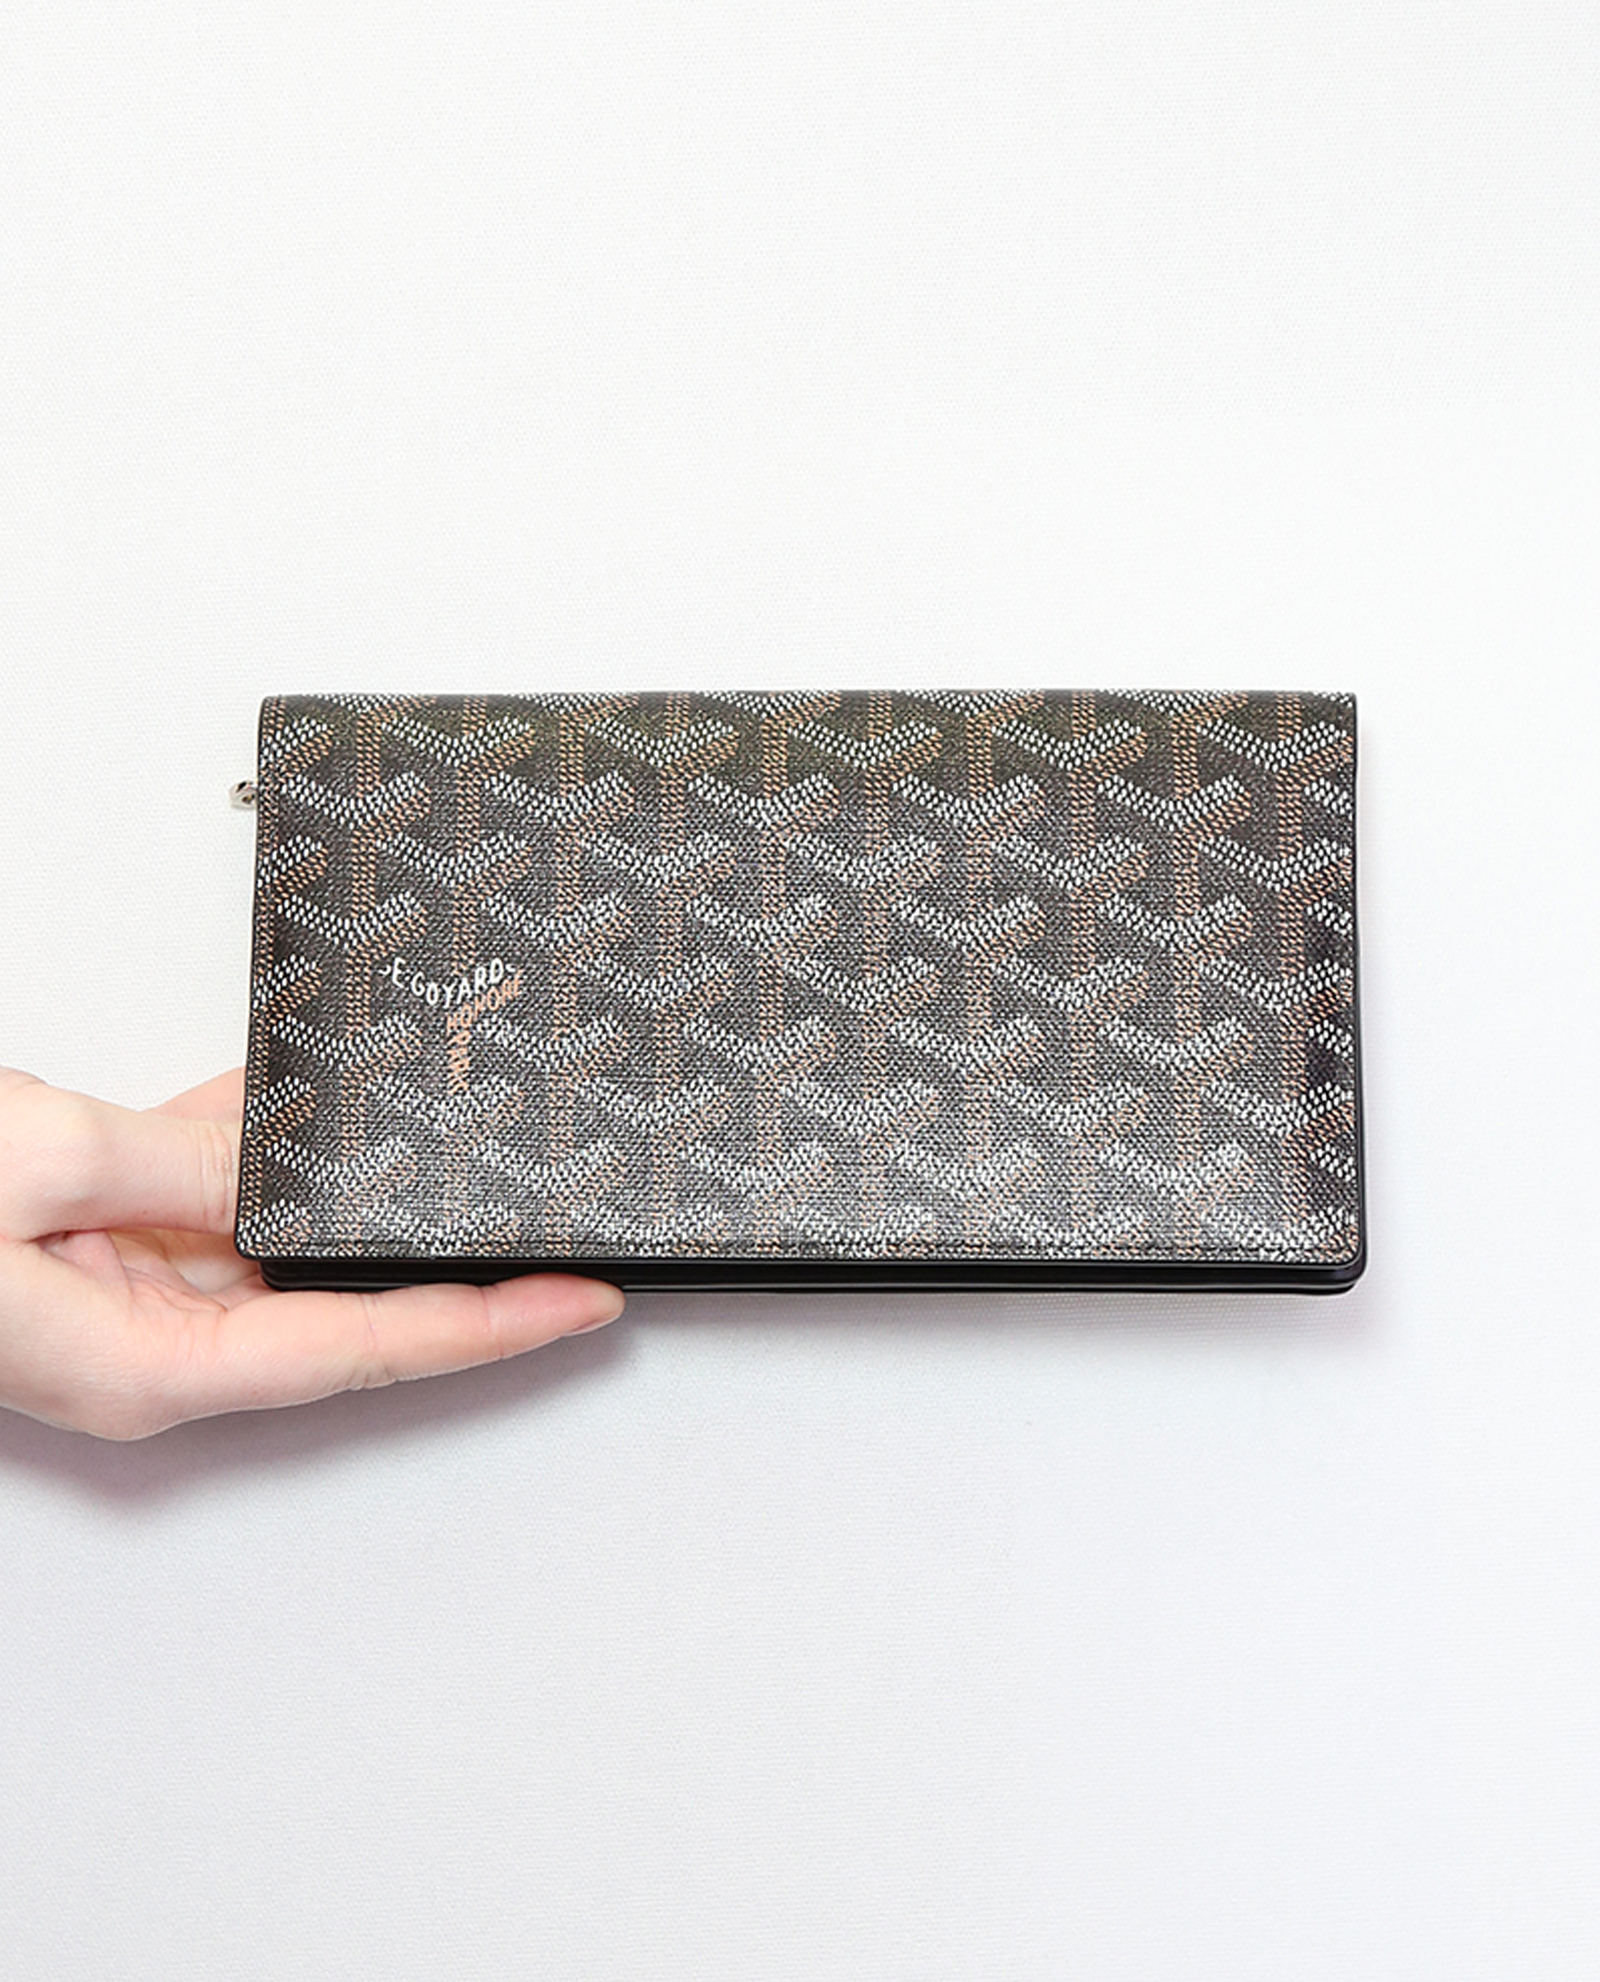 Goyard wallet from queenieluxury : r/DesignerReps